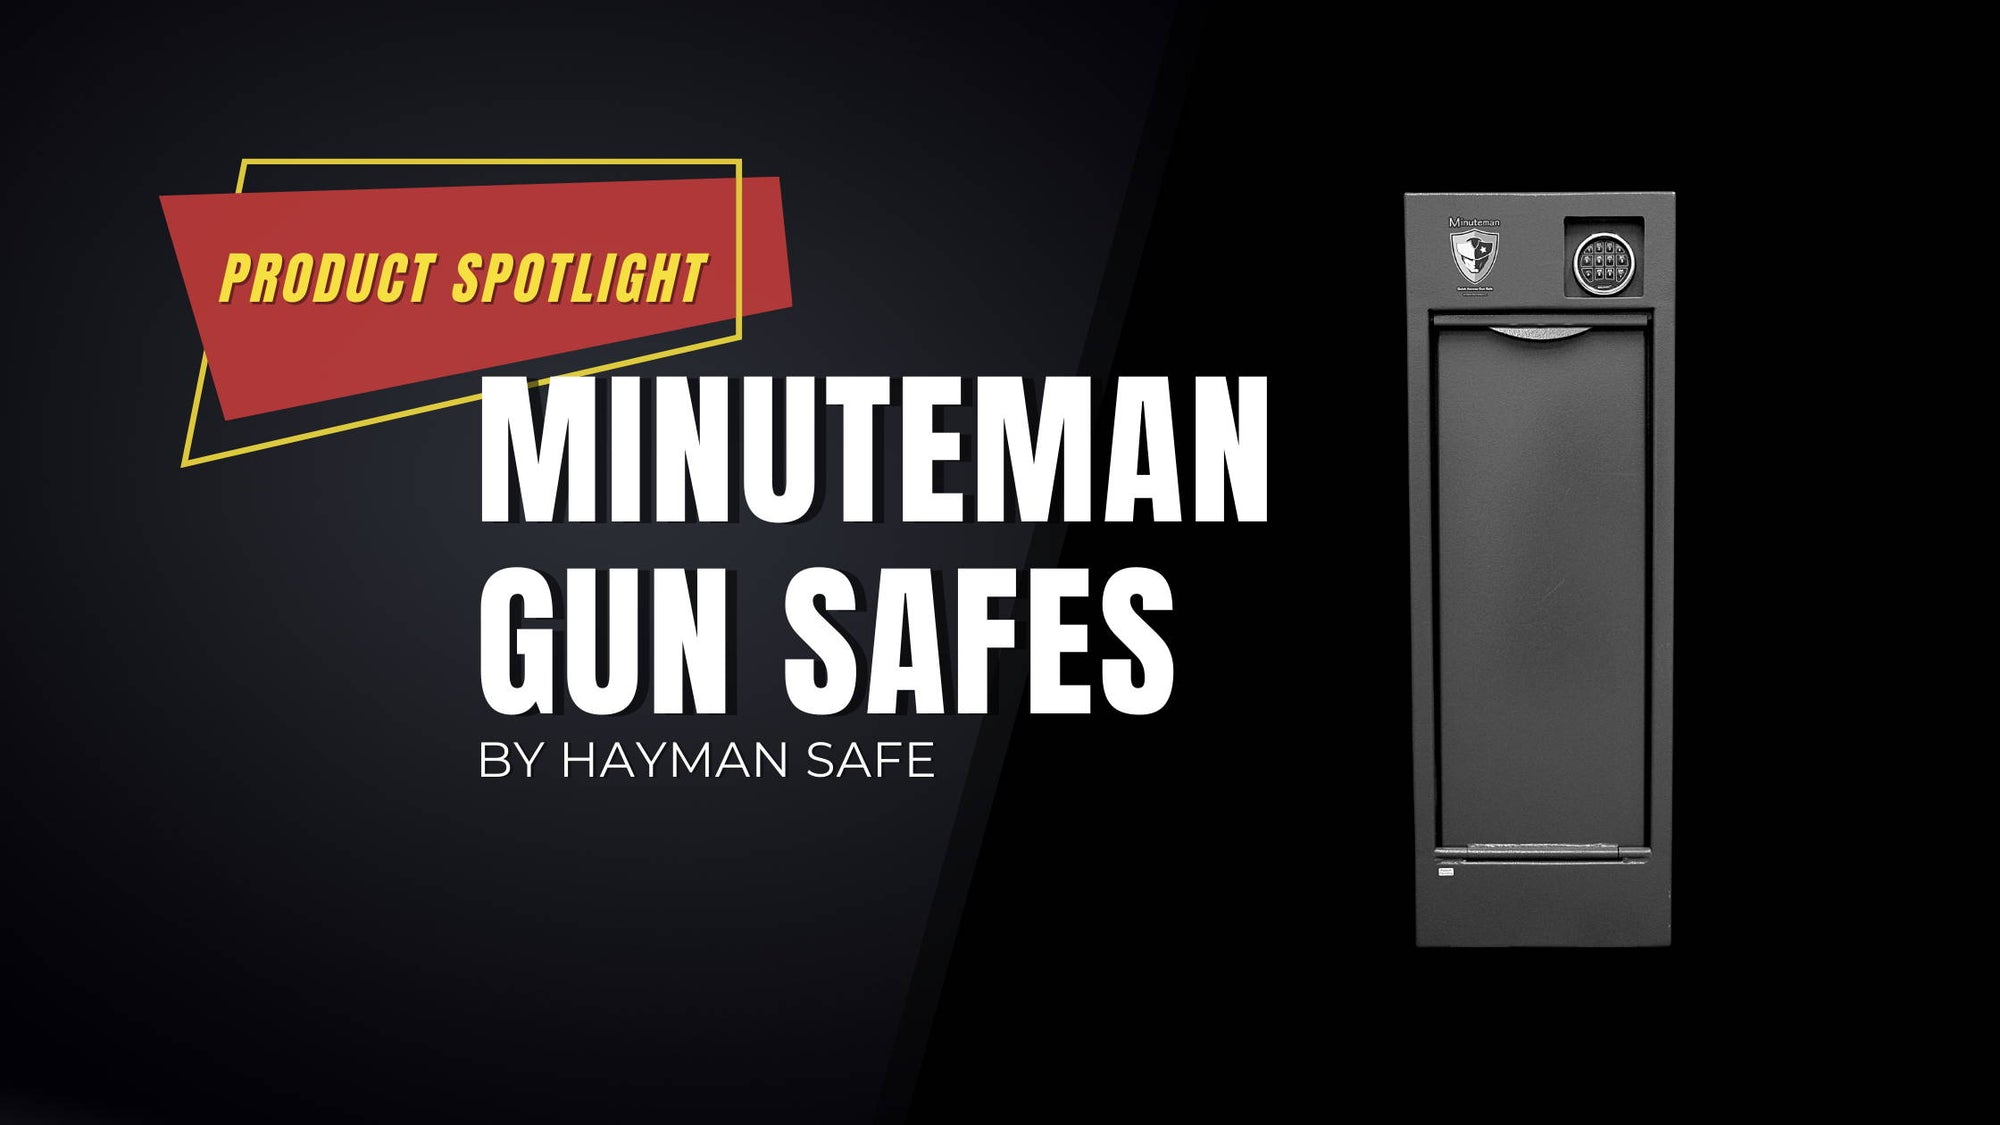 Product Spotlight: Minuteman Gun Safes by Hayman Safe